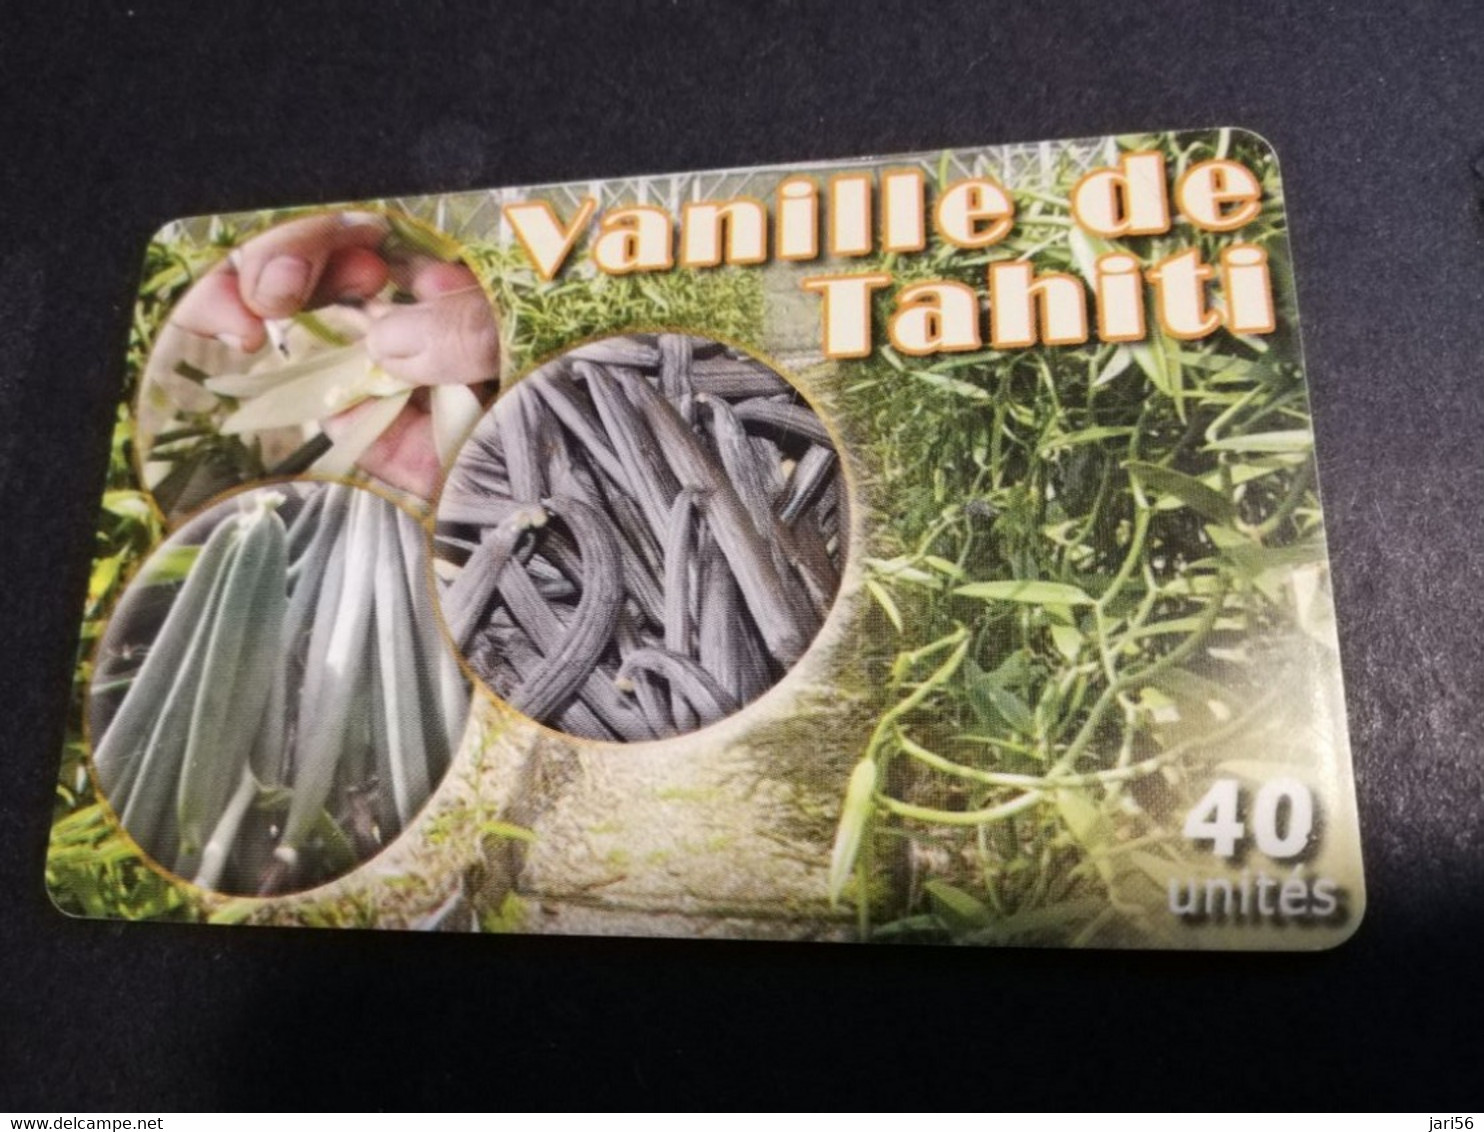 POLINESIA FRANCAISE  CHIPCARD  40 UNITS  VANILLE DE TAHITI         **4924** - Polynésie Française